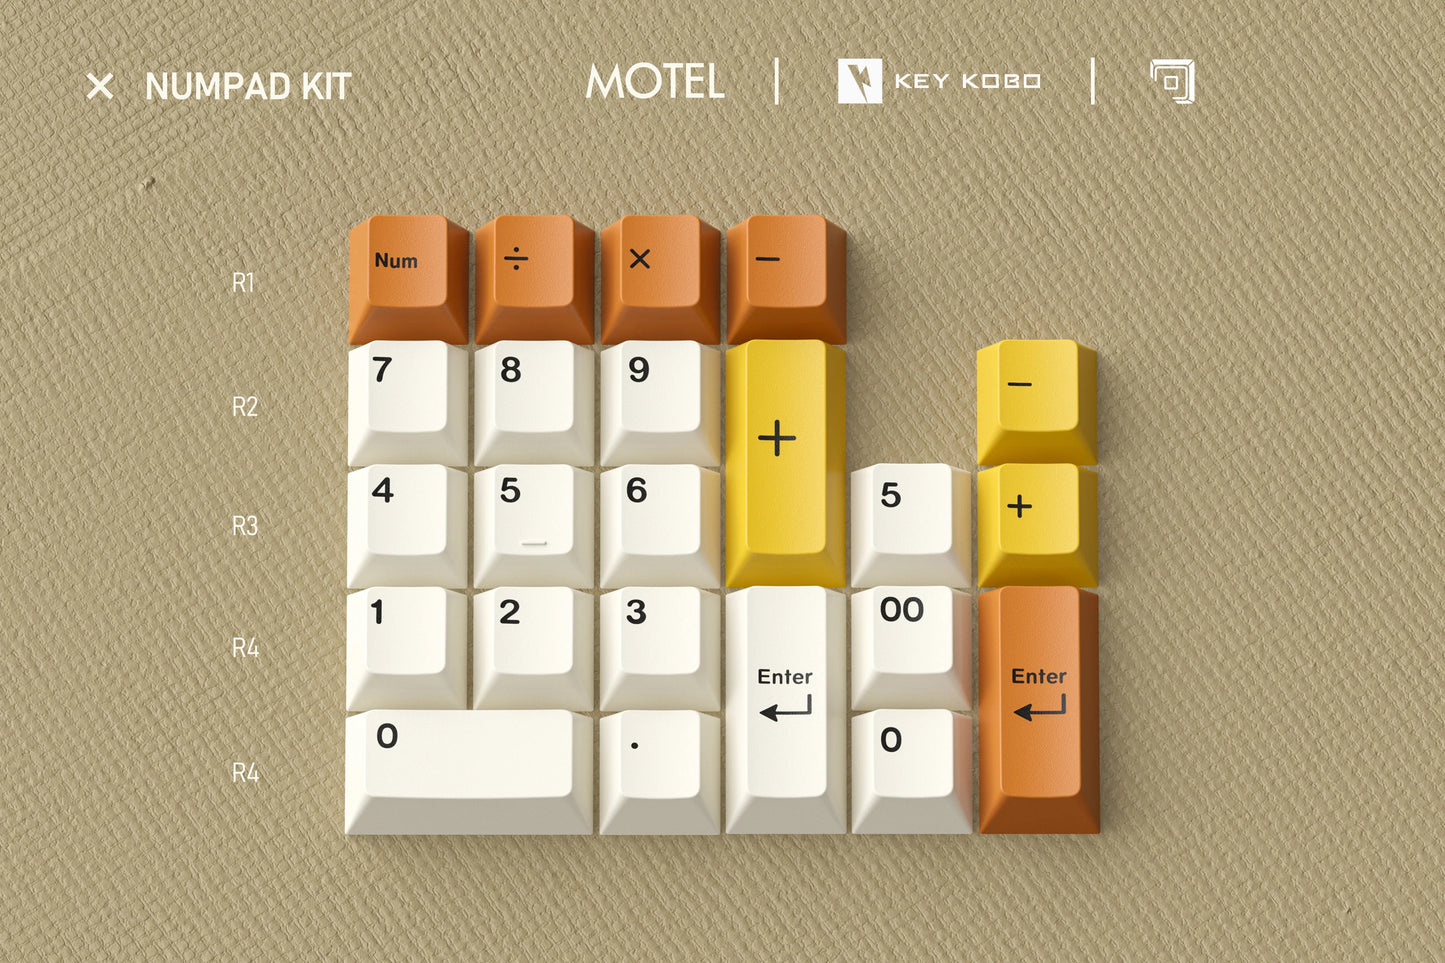 KeyKobo Motel Keycap Set [In-Stock]